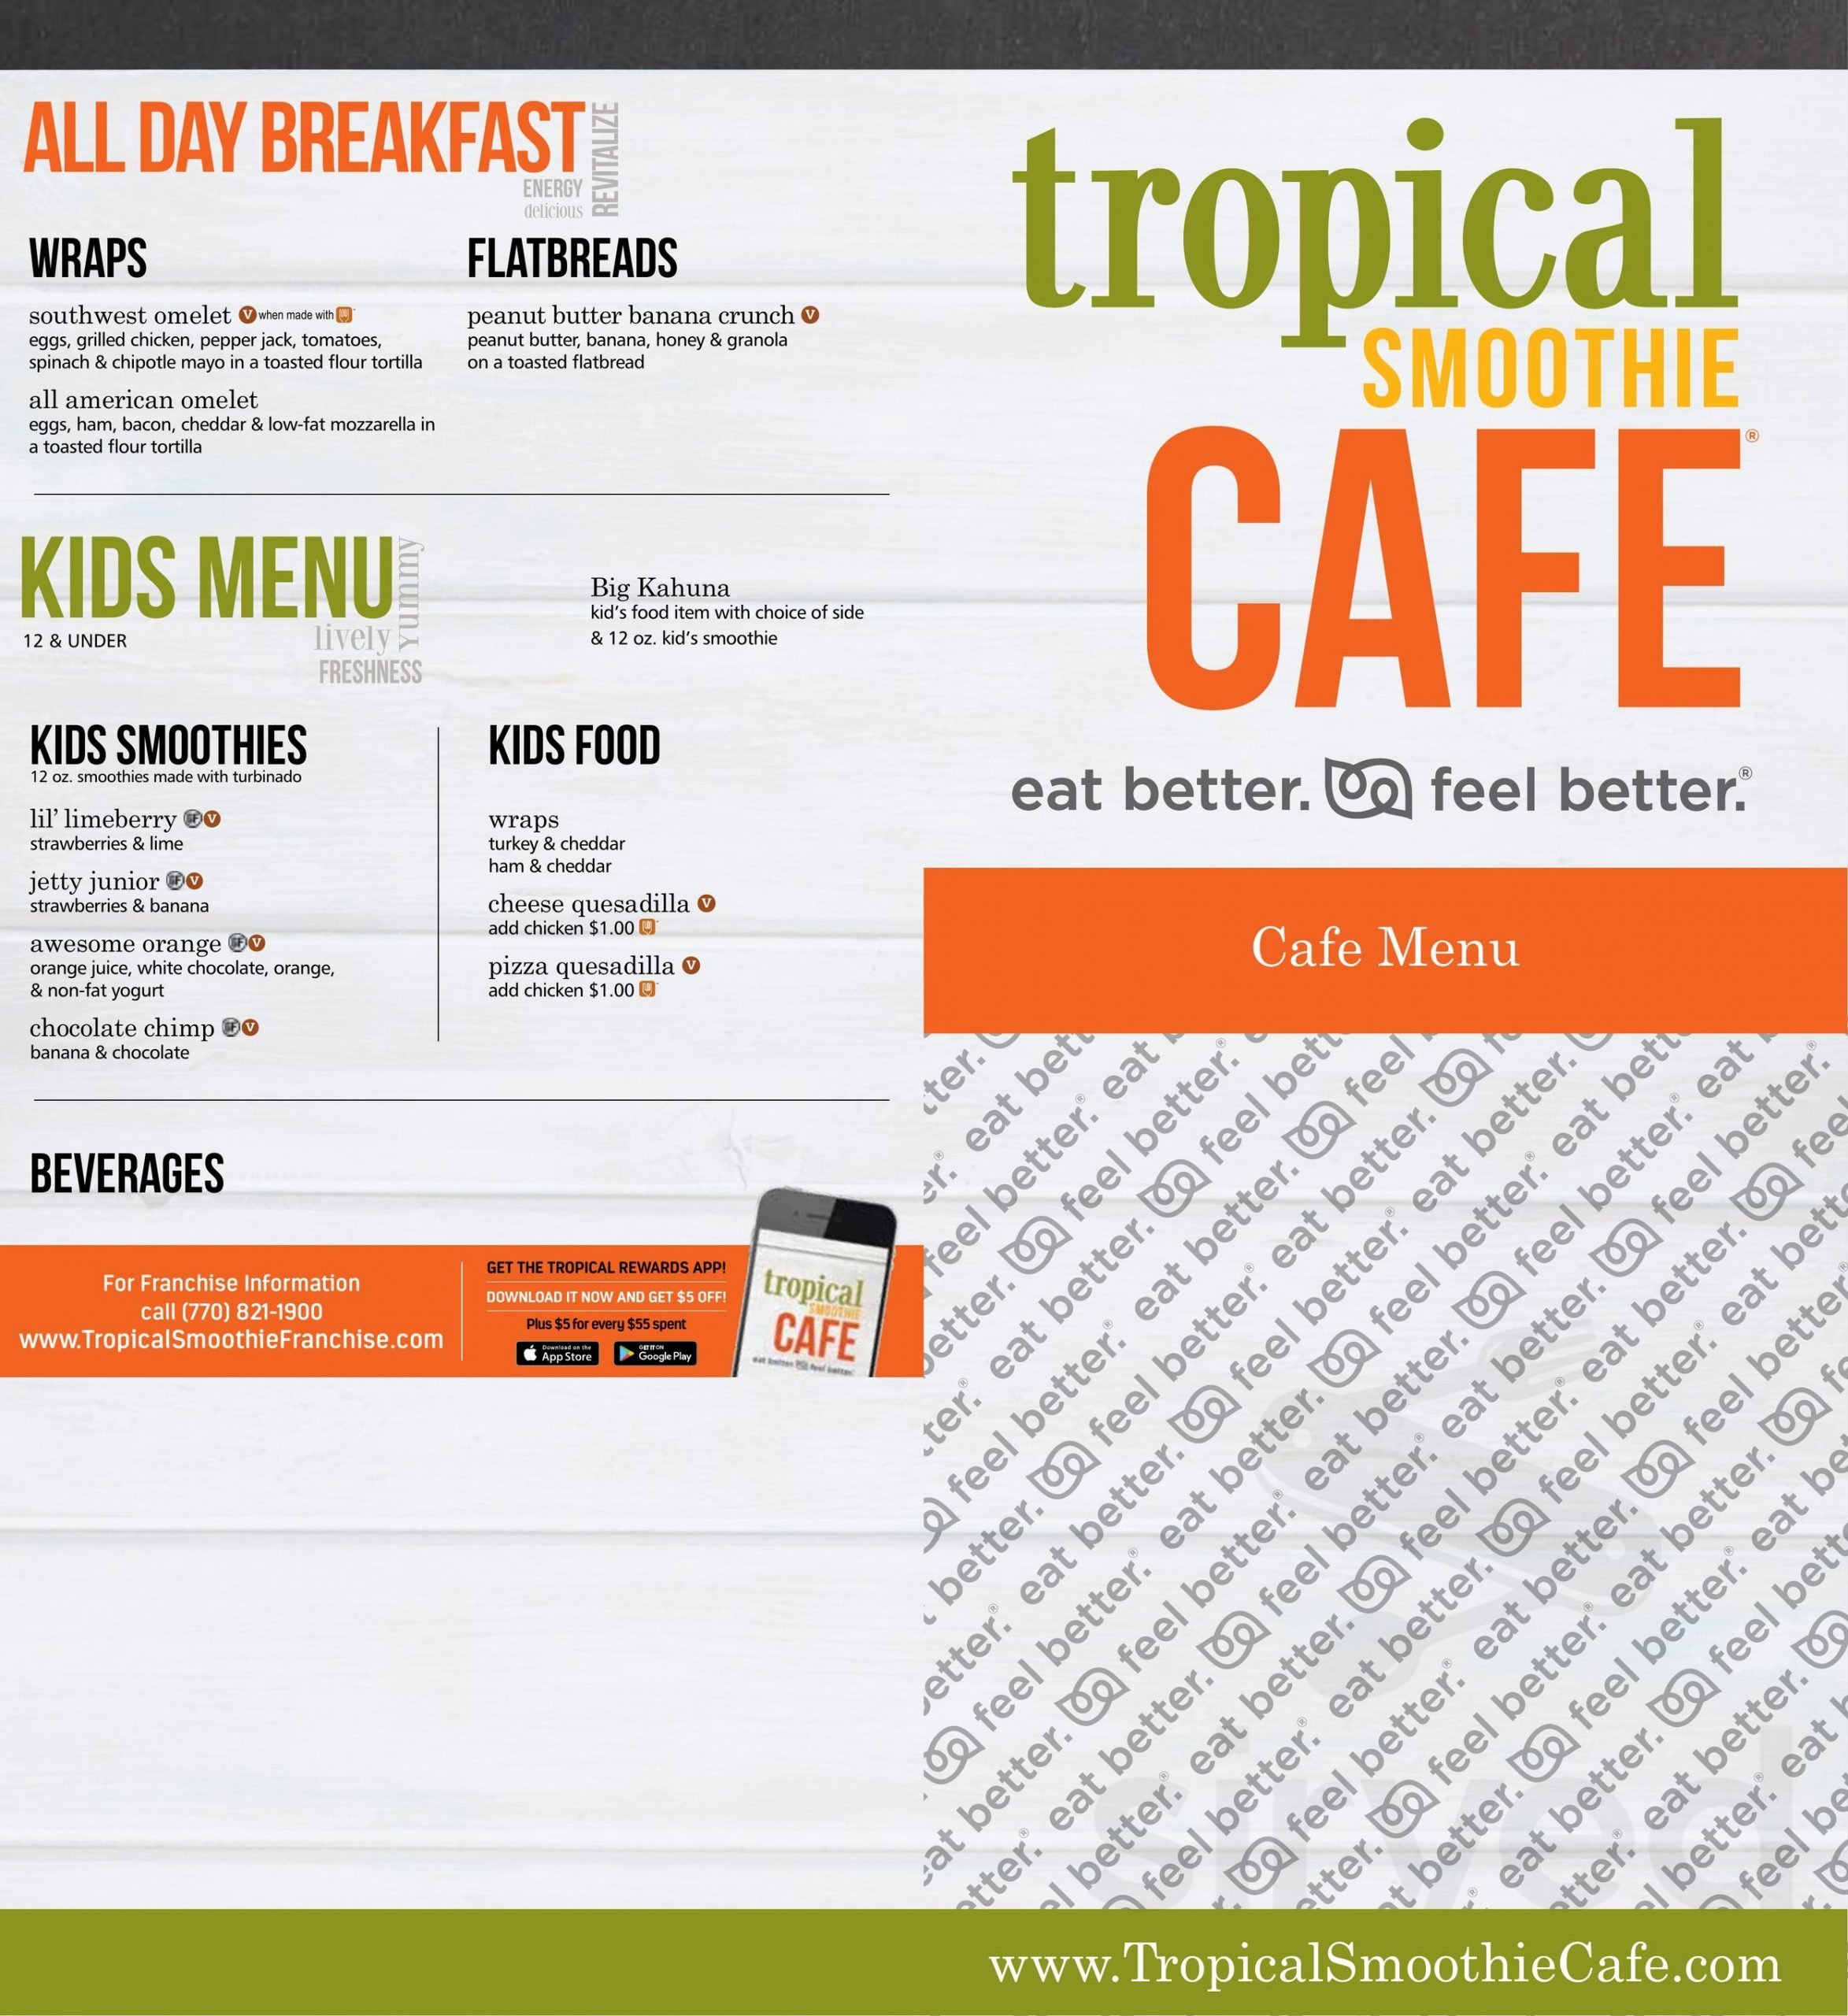 Tropical Smoothie Cafe menu in Tulsa, Oklahoma, USA